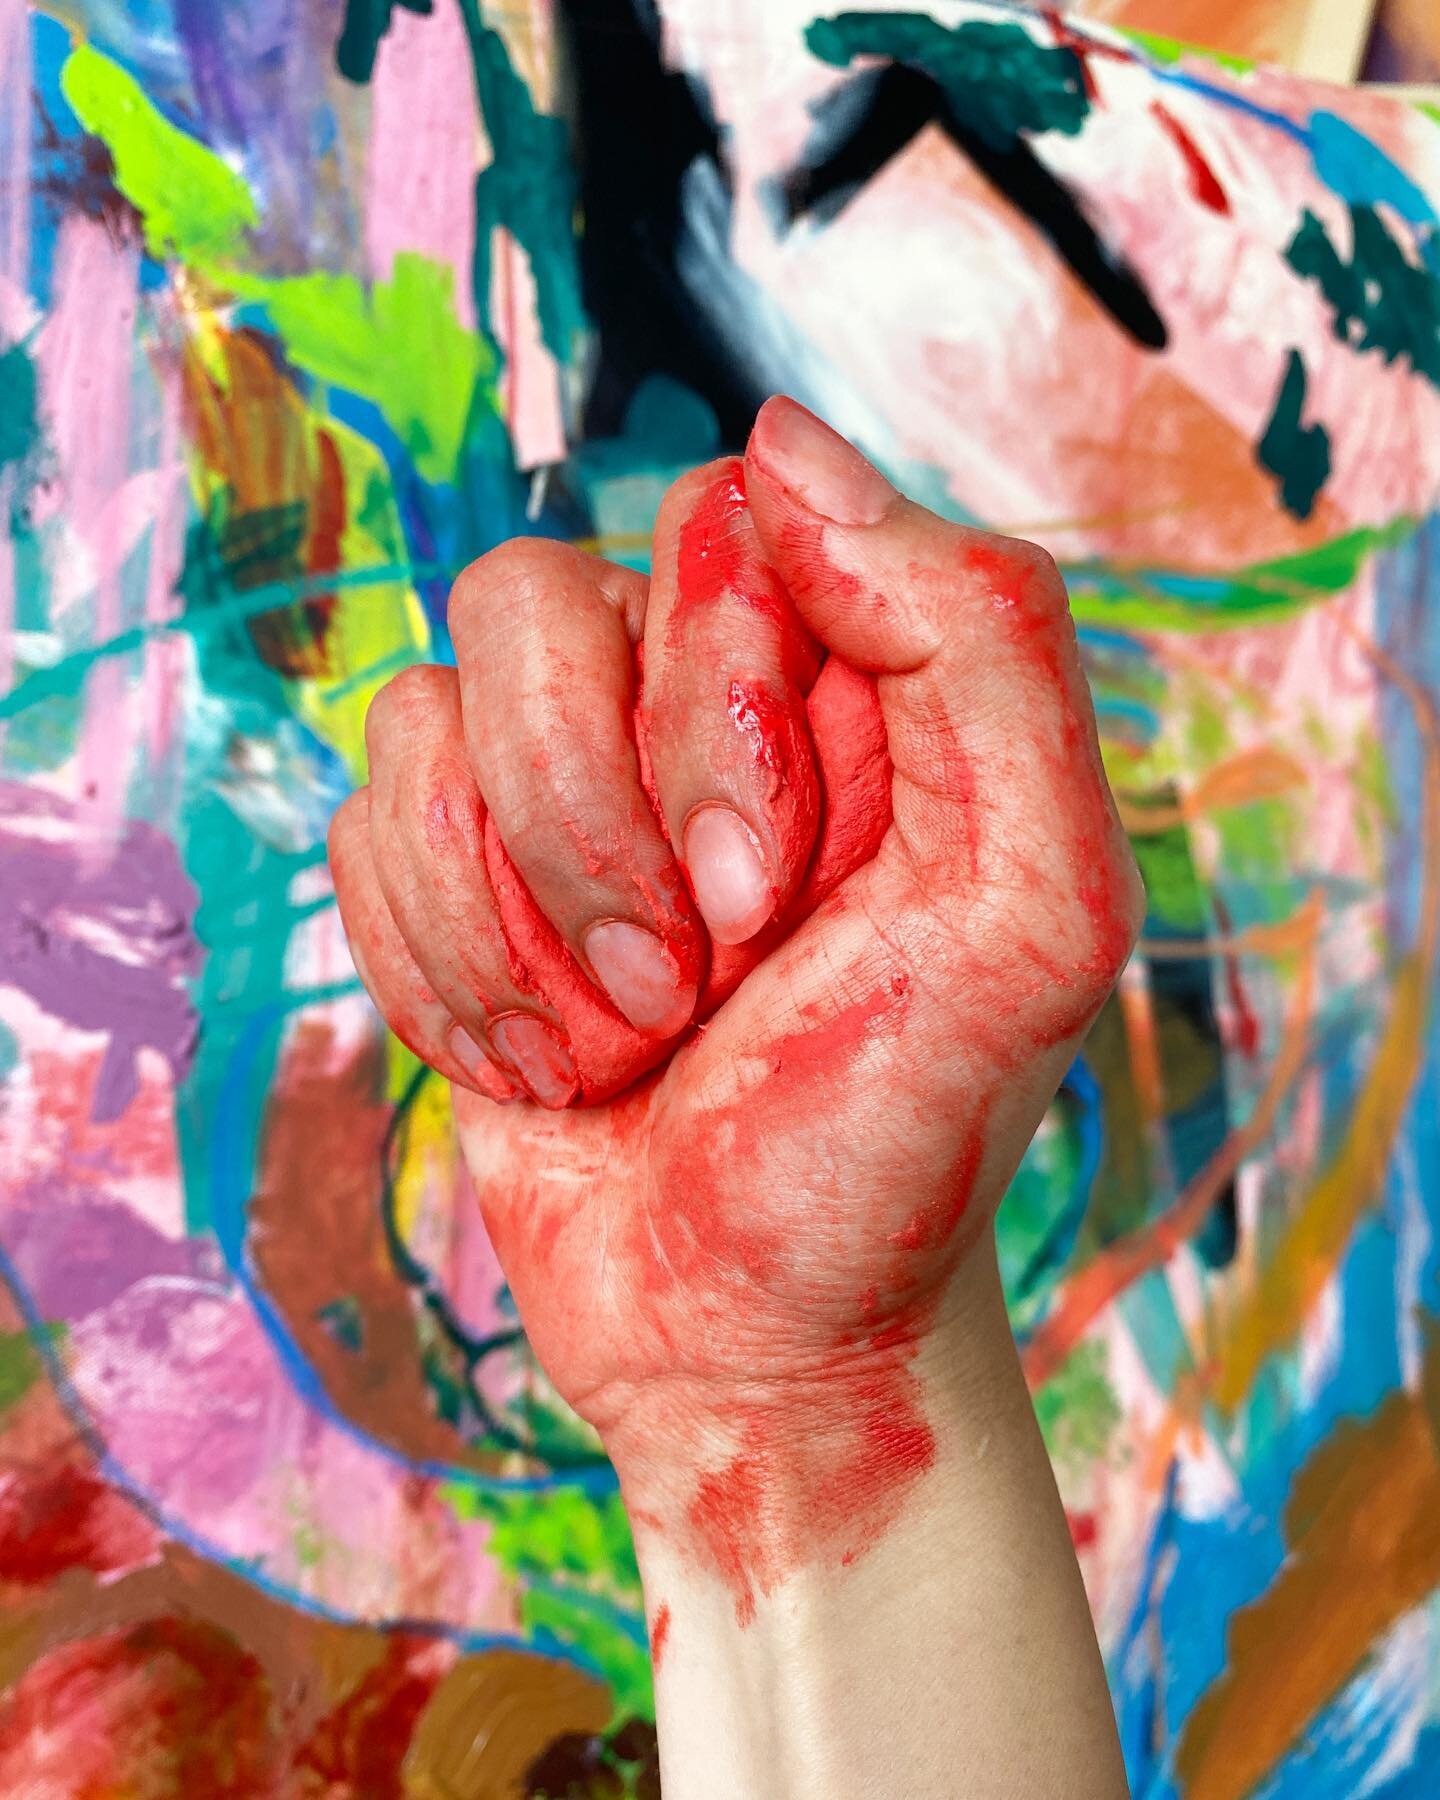 Bloody hand action 🤚🏼🩸with my newest painting in the background🎢🌟

ねるねるね〜る、じゃねーわ。
粘土だよ！❣️
____________________________
#ねるねるねるね #ではありません  #mindfulness #emergingartist #yayoikusama #queerart #callforartists #selfgrowth #callforart #basquiat #heal